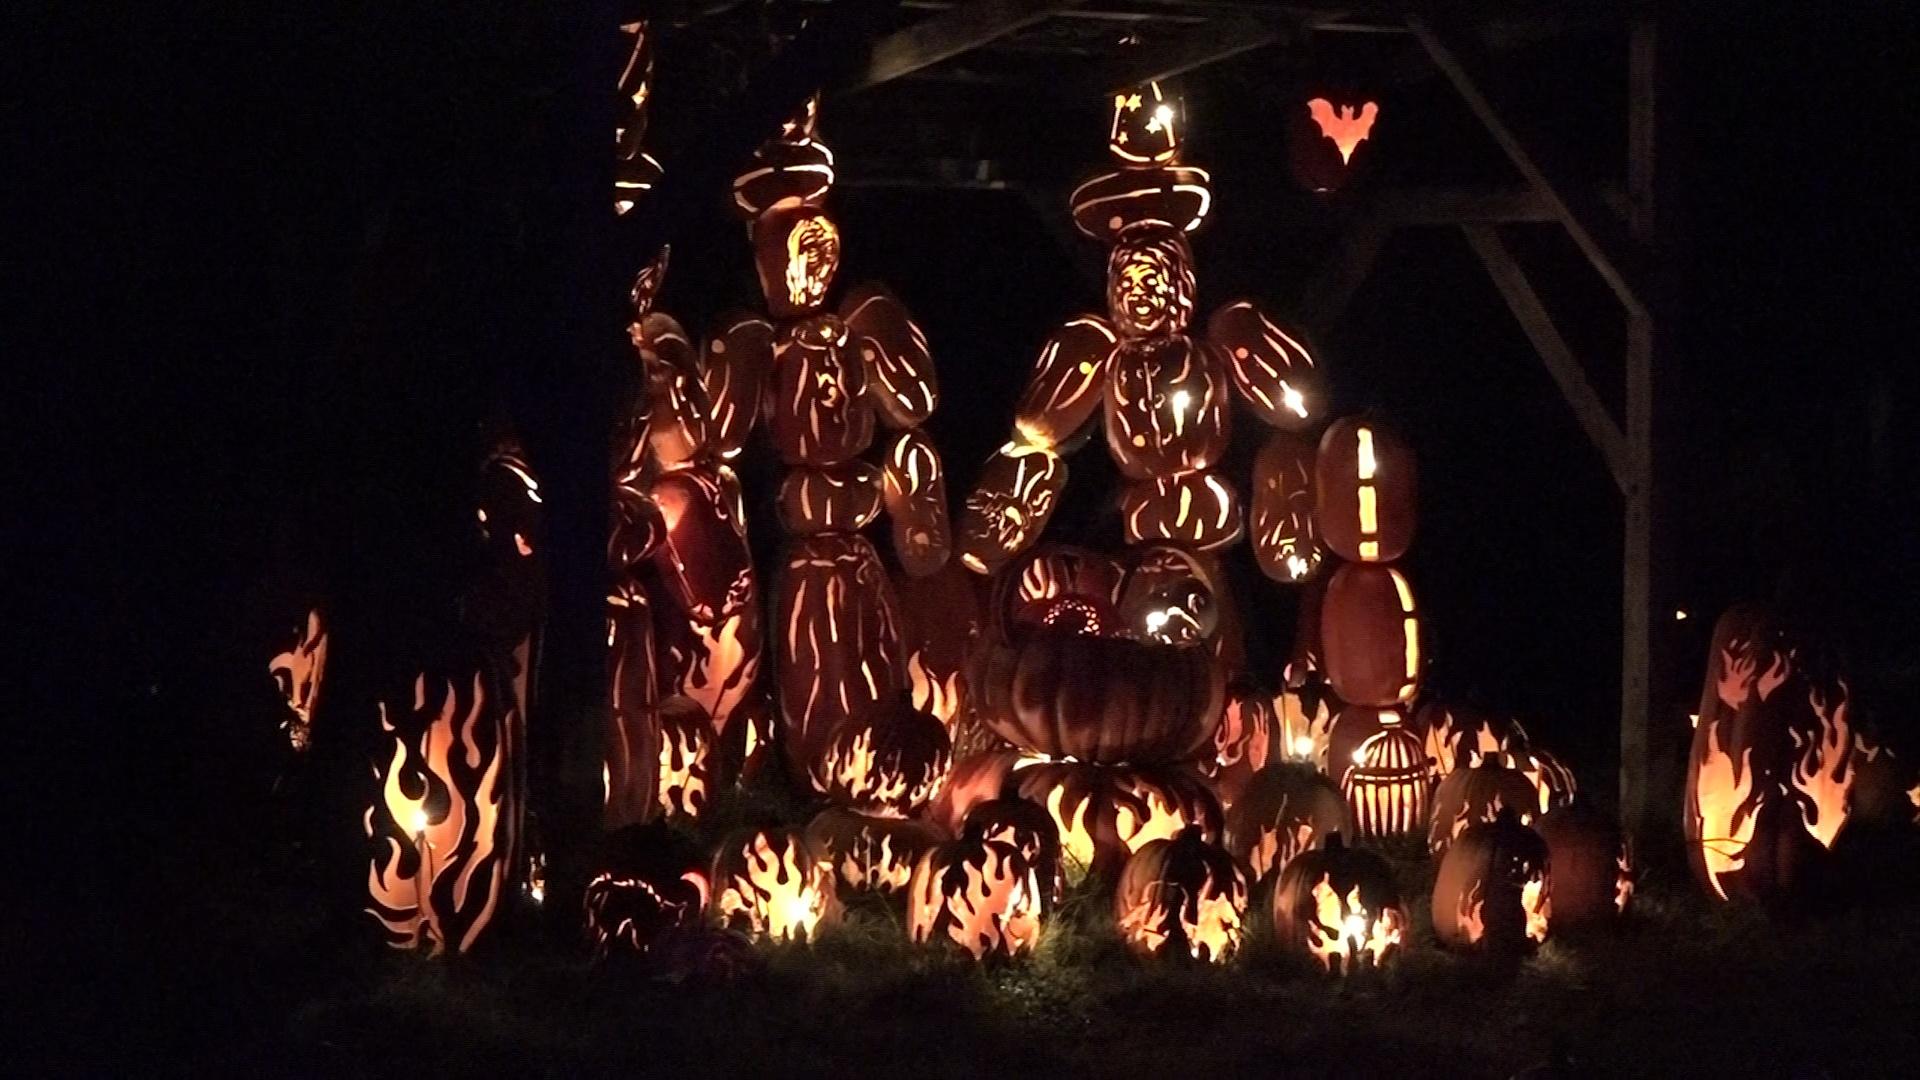 A Hudson Valley Halloween The Great Jack O' Lantern Blaze MetroFocus